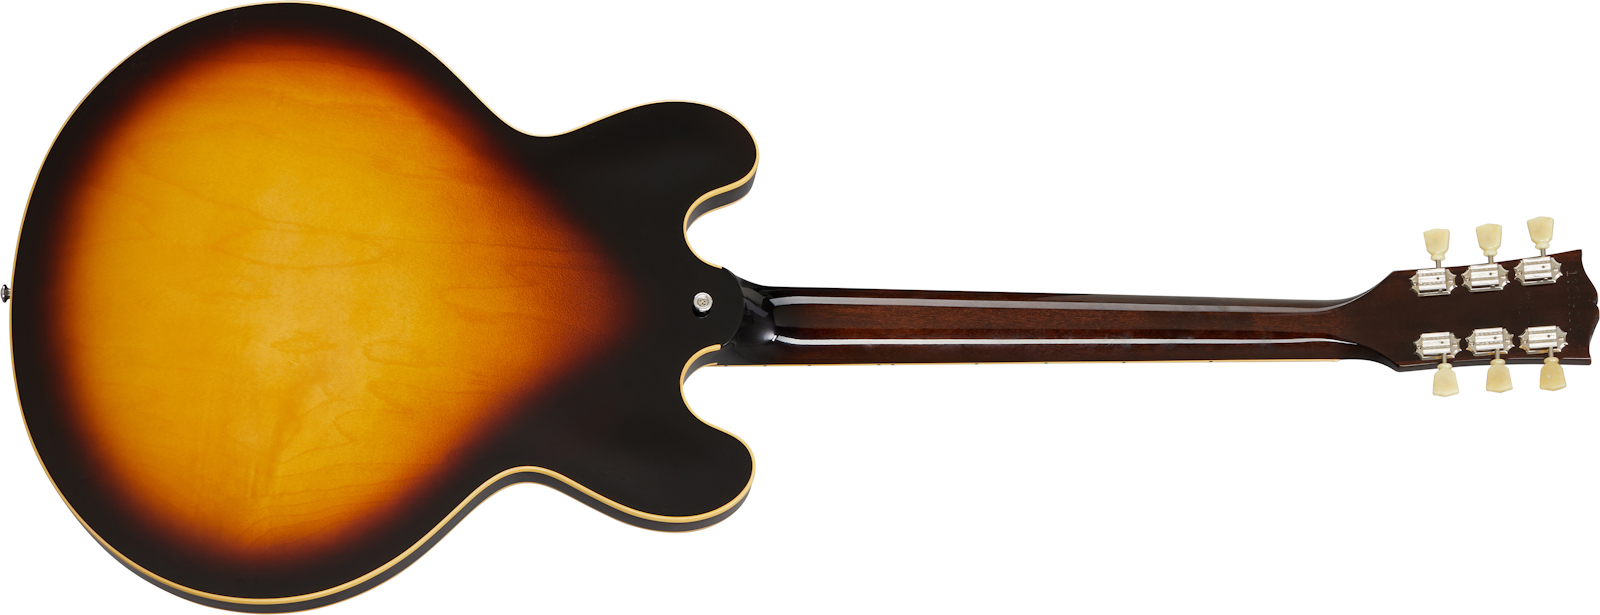 Gibson Es-345 Original 2020 2h Ht Rw - Vintage Burst - Semi-hollow electric guitar - Variation 1